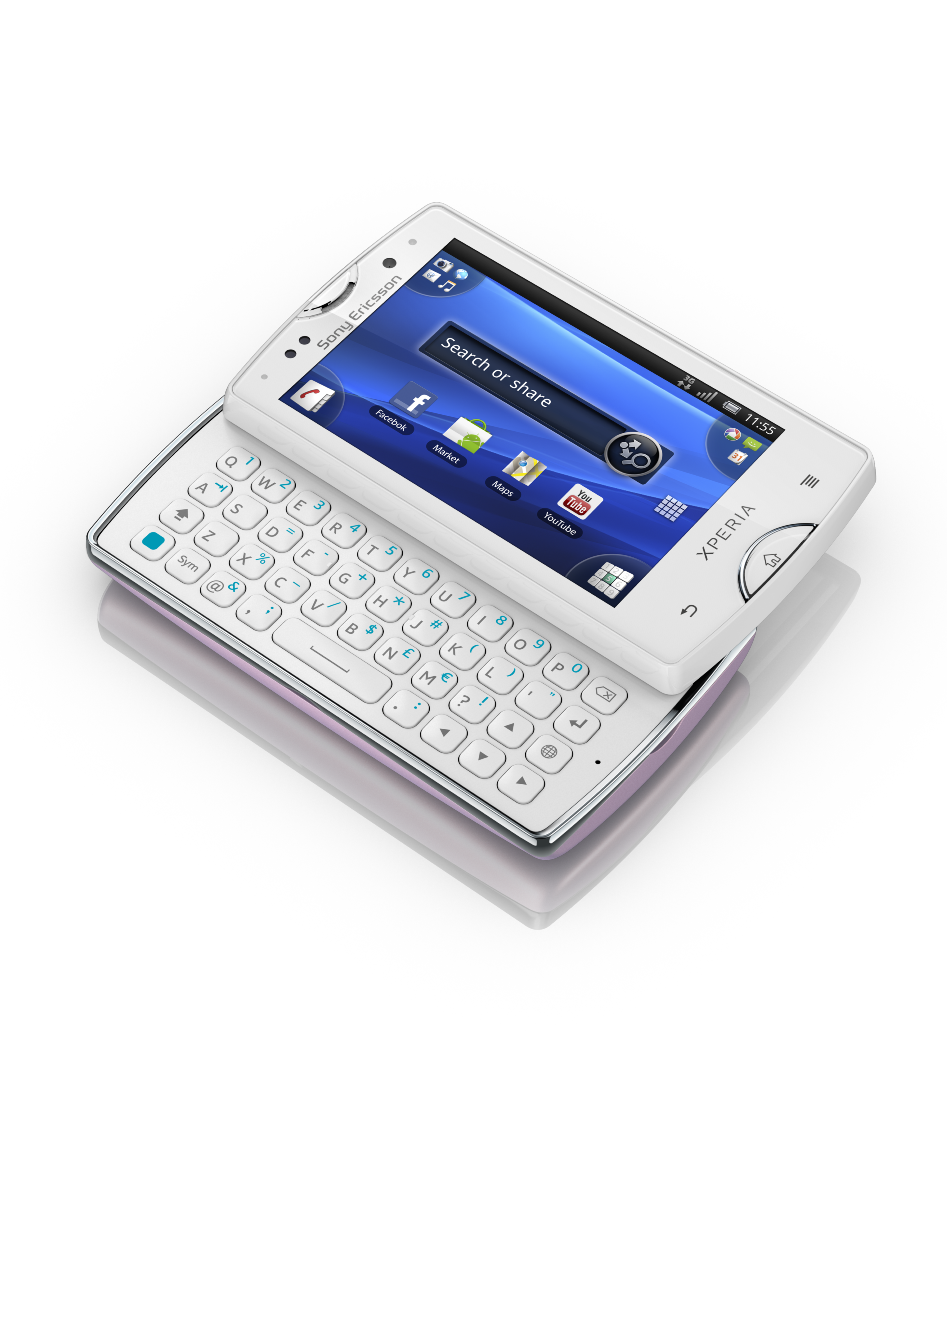 Sony xperia mini. Sony Xperia Mini Pro. Sony Ericsson Xperia Mini. Sony Ericsson Xperia Mini Pro. Xperia Pro 1.